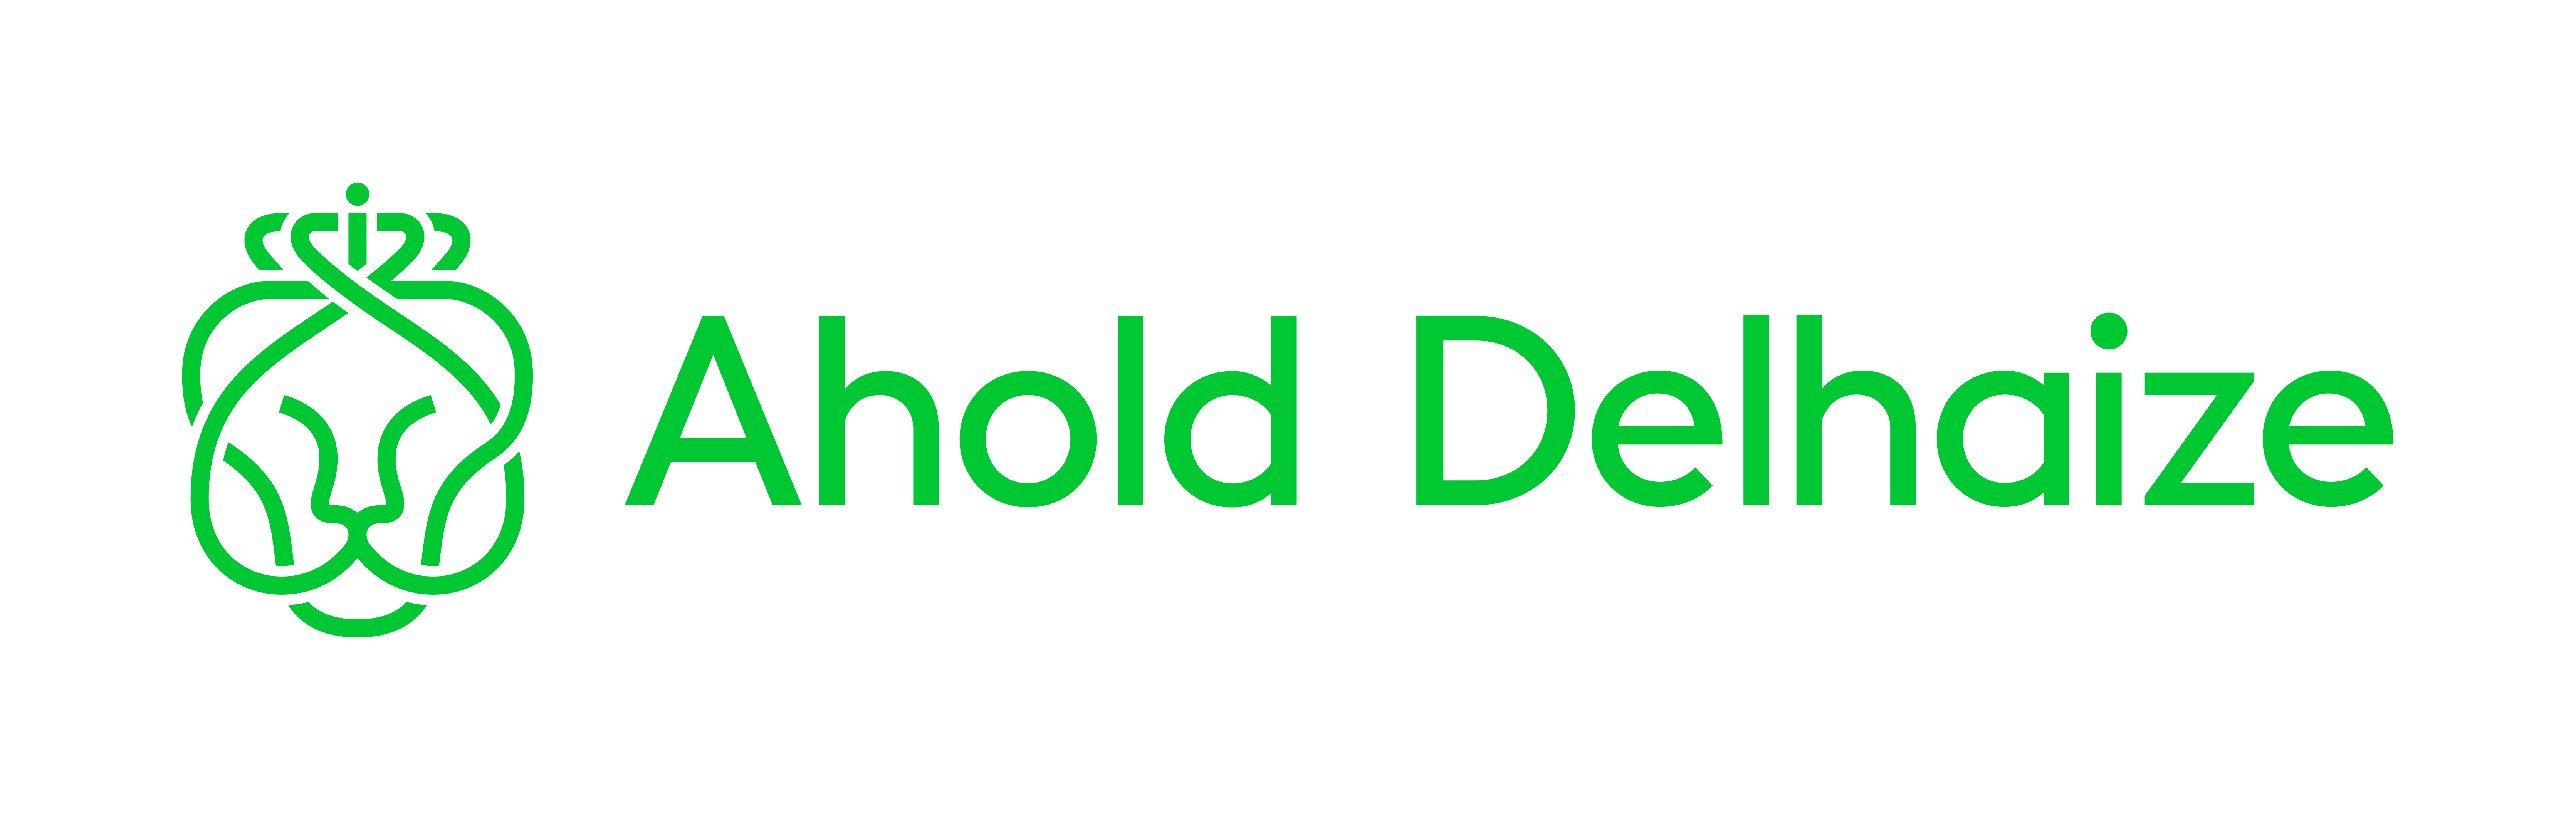 Delhaize Ahold Logo - Koninklijke Ahold Delhaize NV | amfori